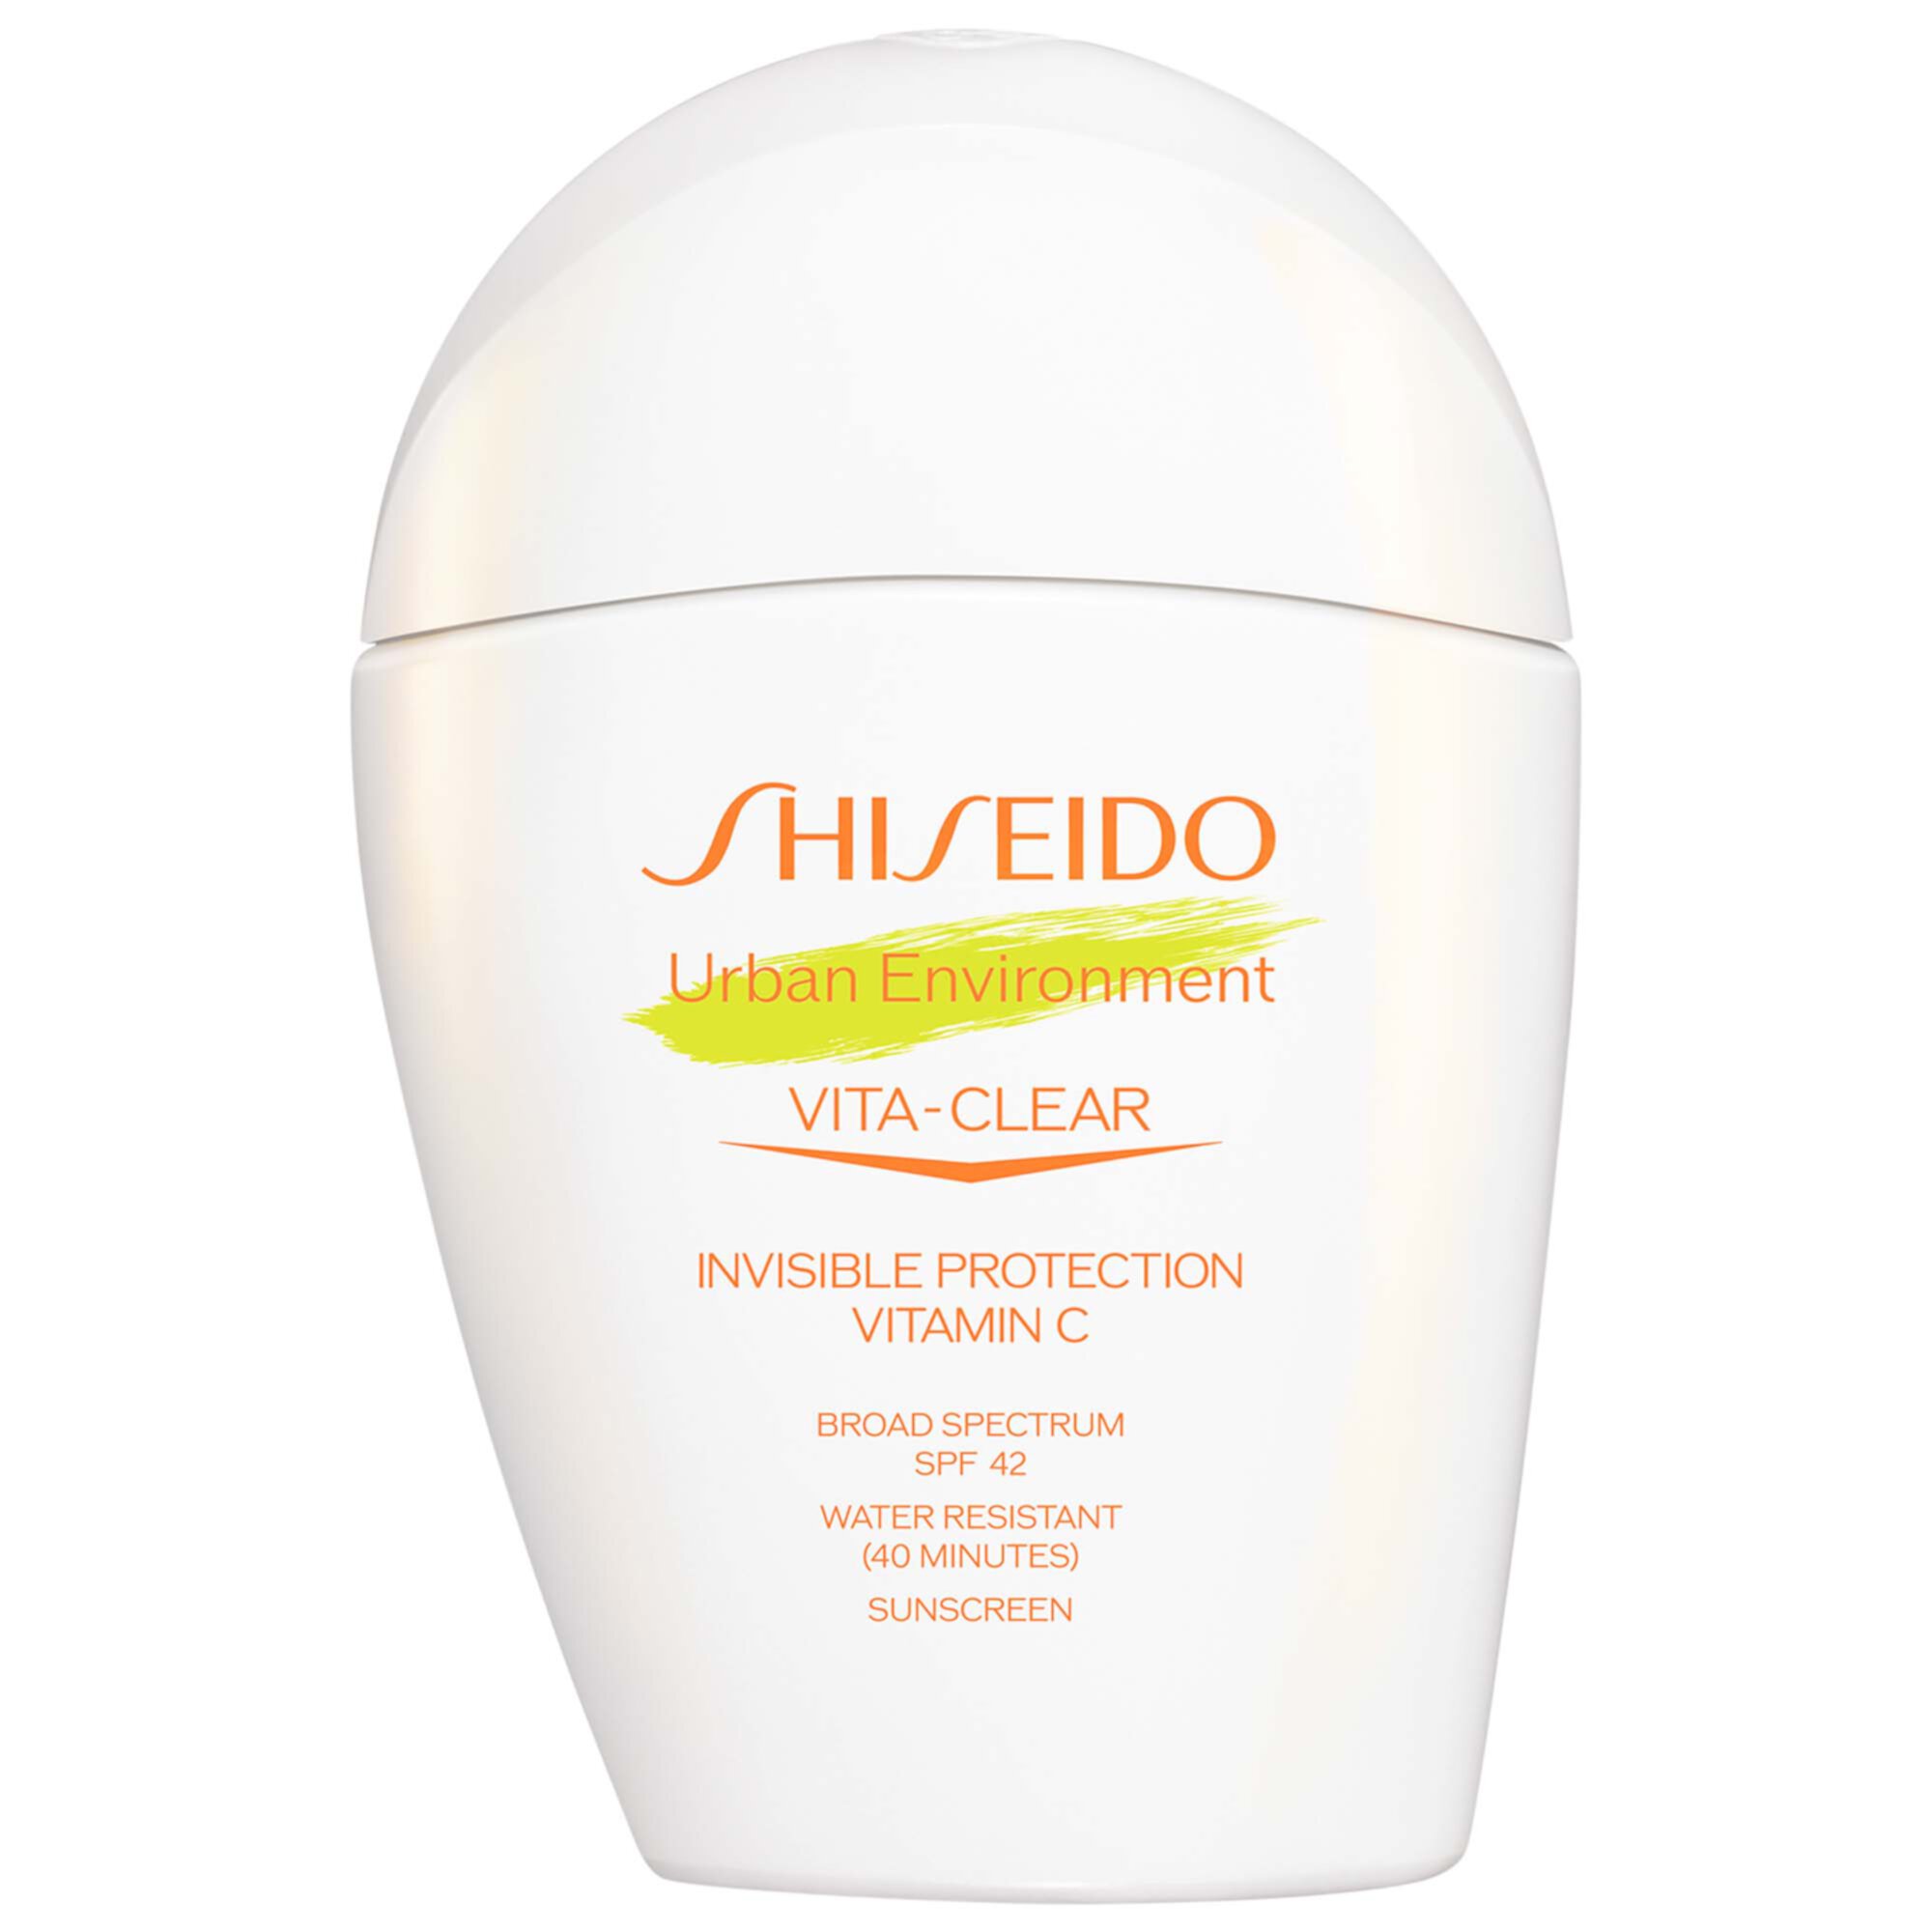 Urban Environment Vita-Clear SPF 42 Face Sunscreen with Vitamin C Shiseido